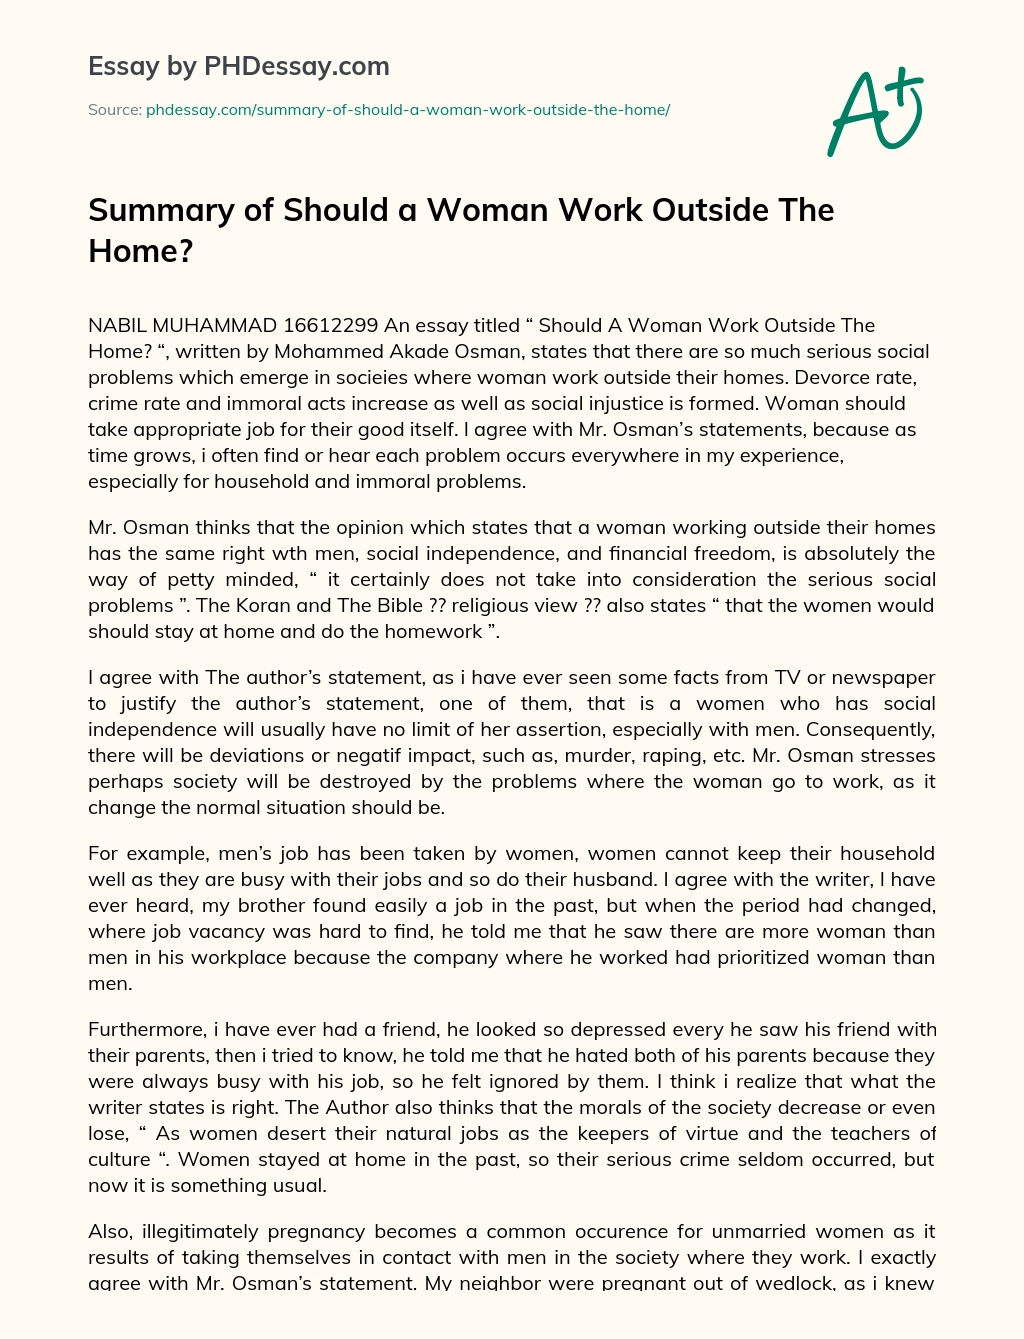 housewife vs career woman essay